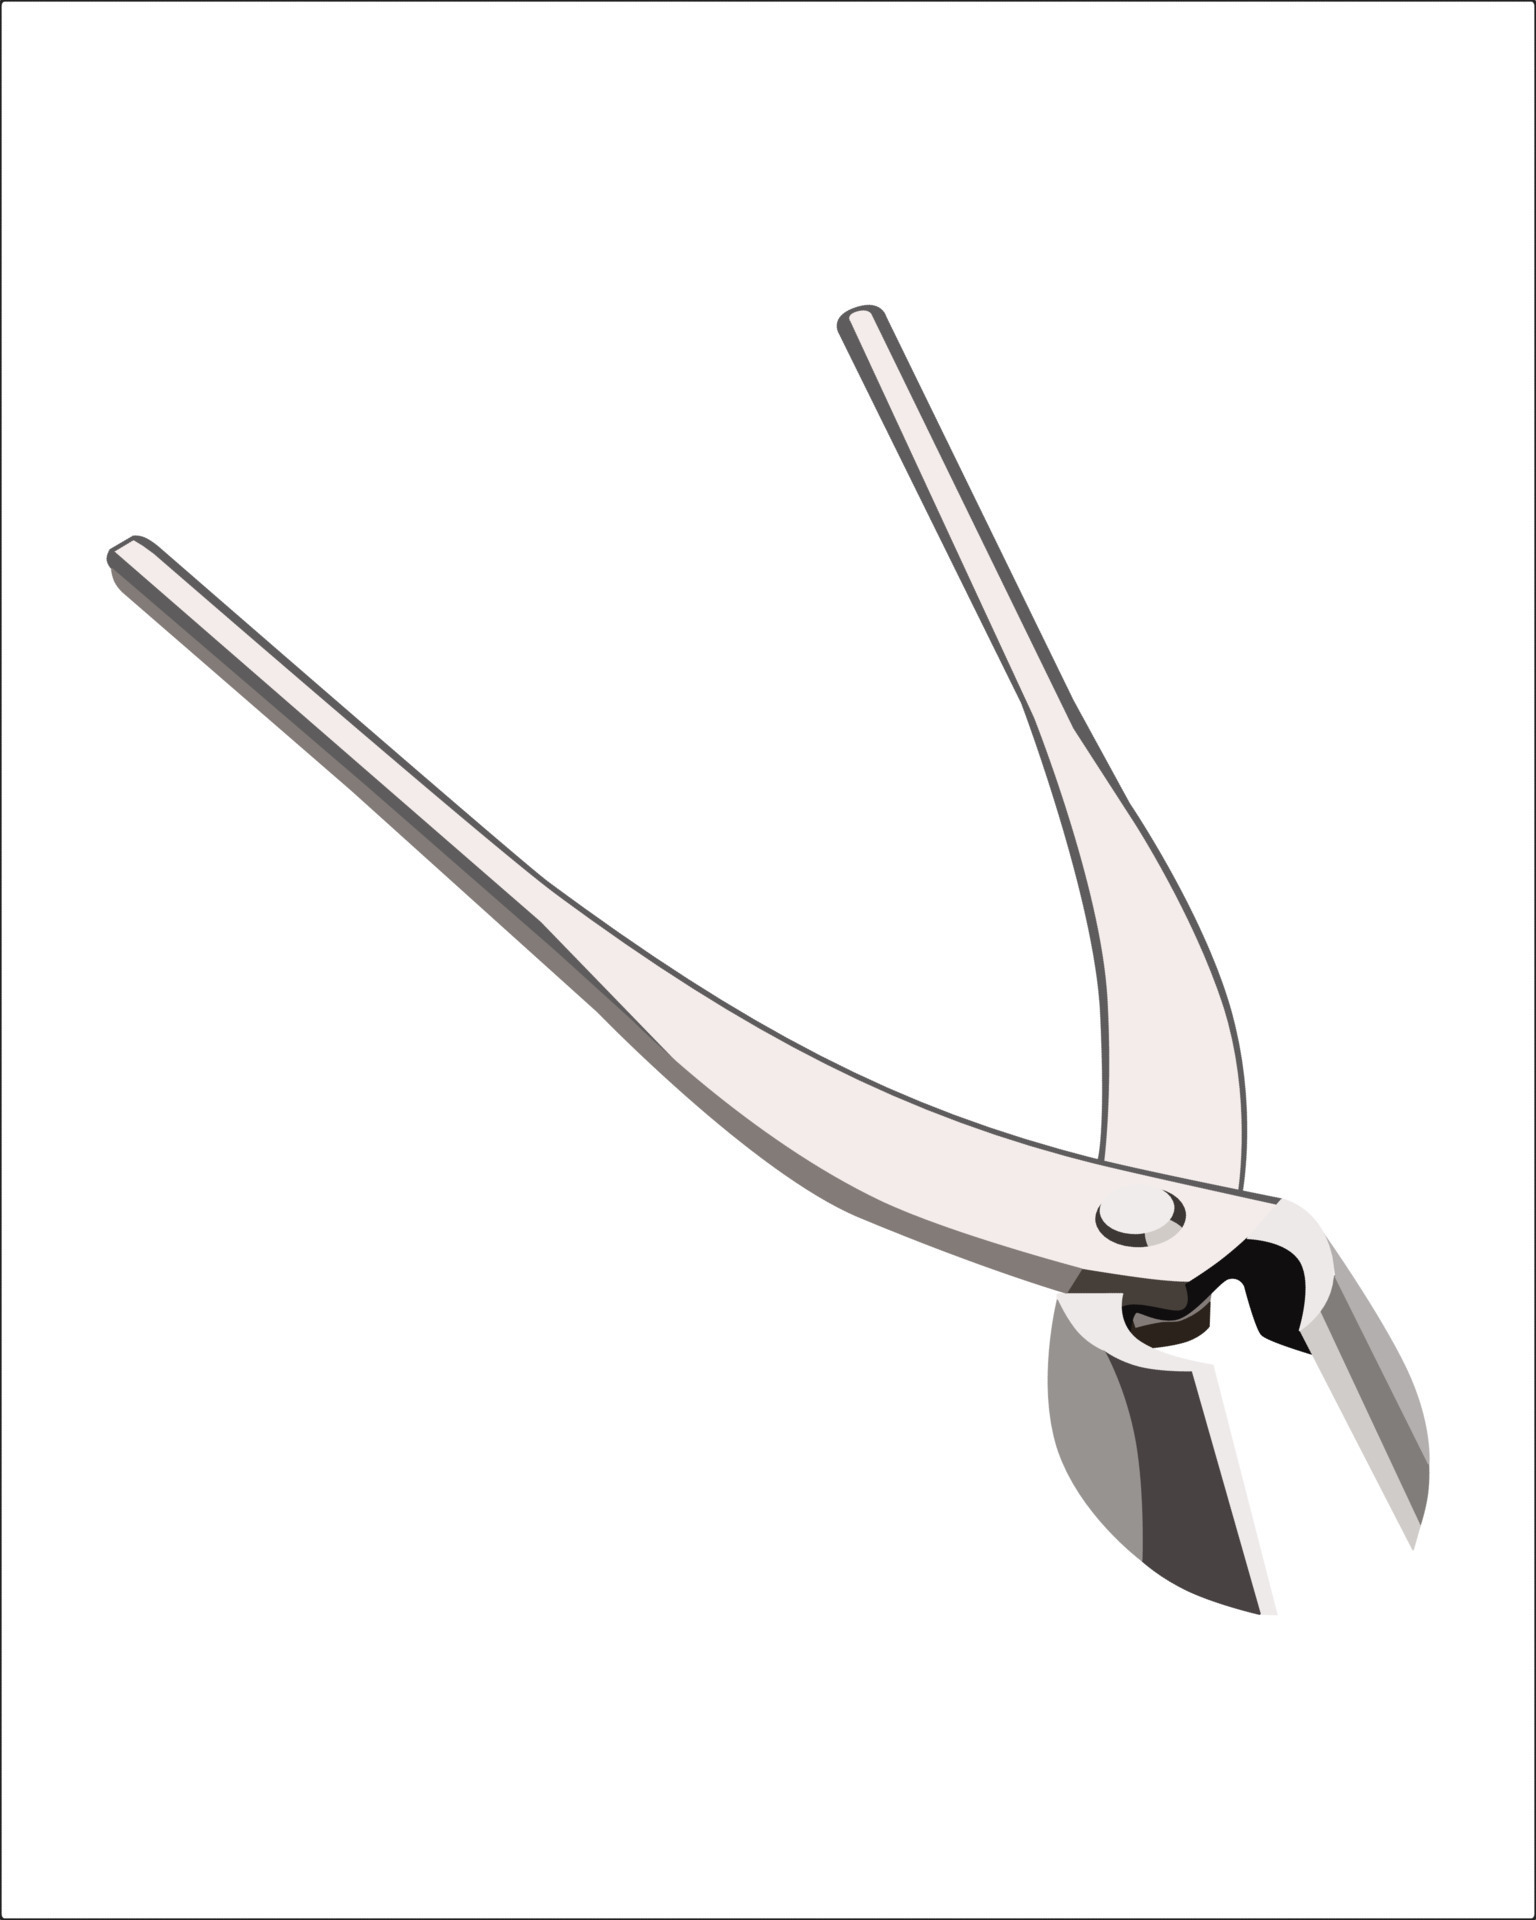 Vector Illustration of Professional grade 280 mm branch cutter